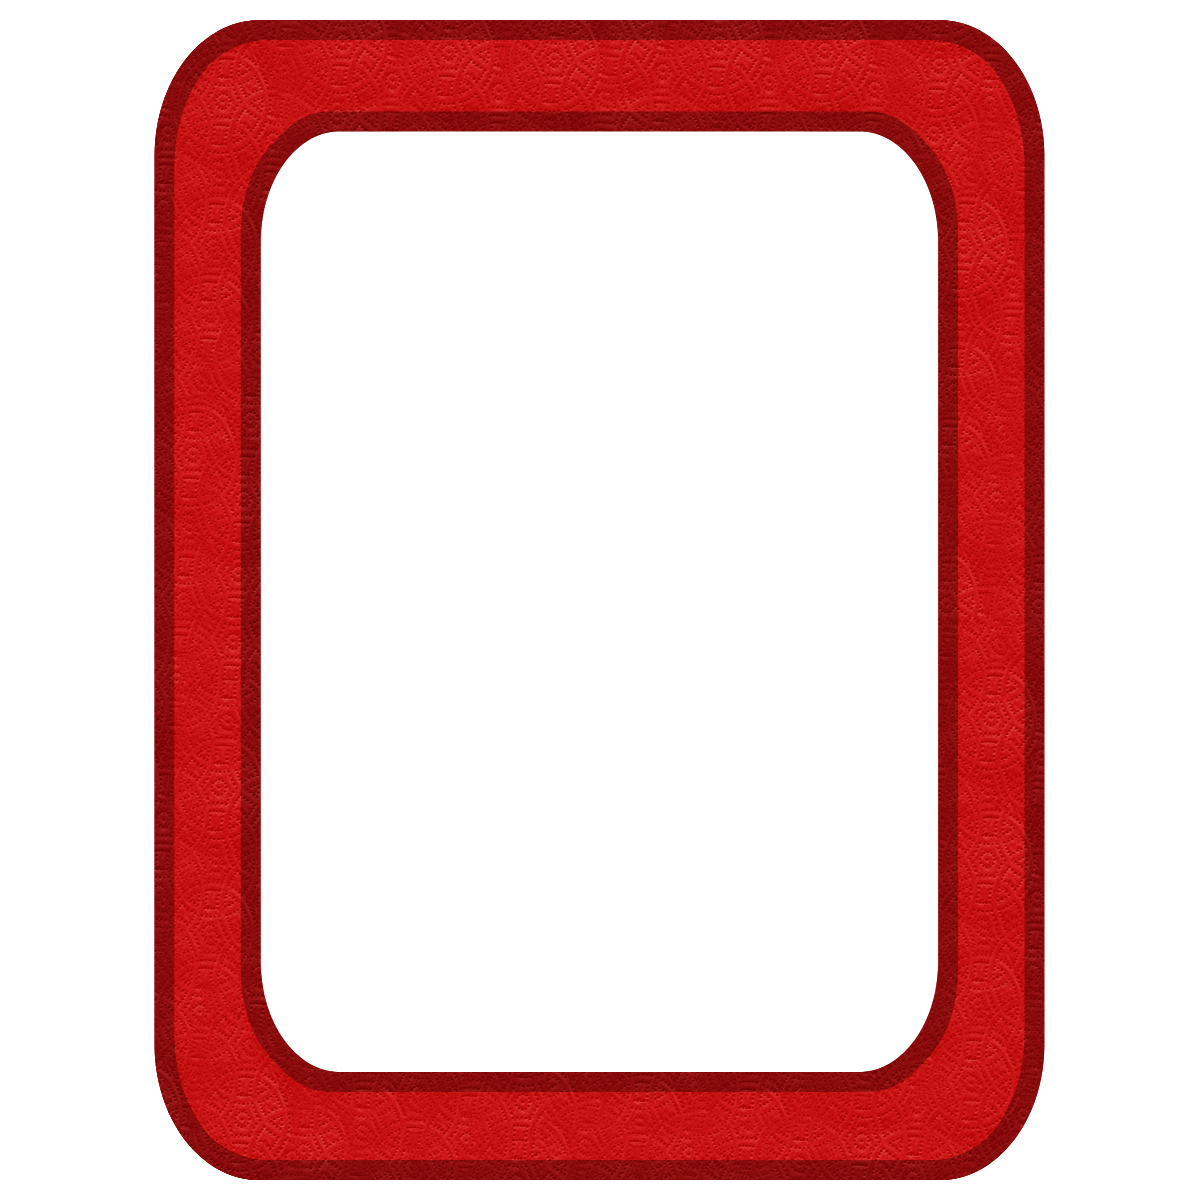 Blood Red Frame PNG Background Image